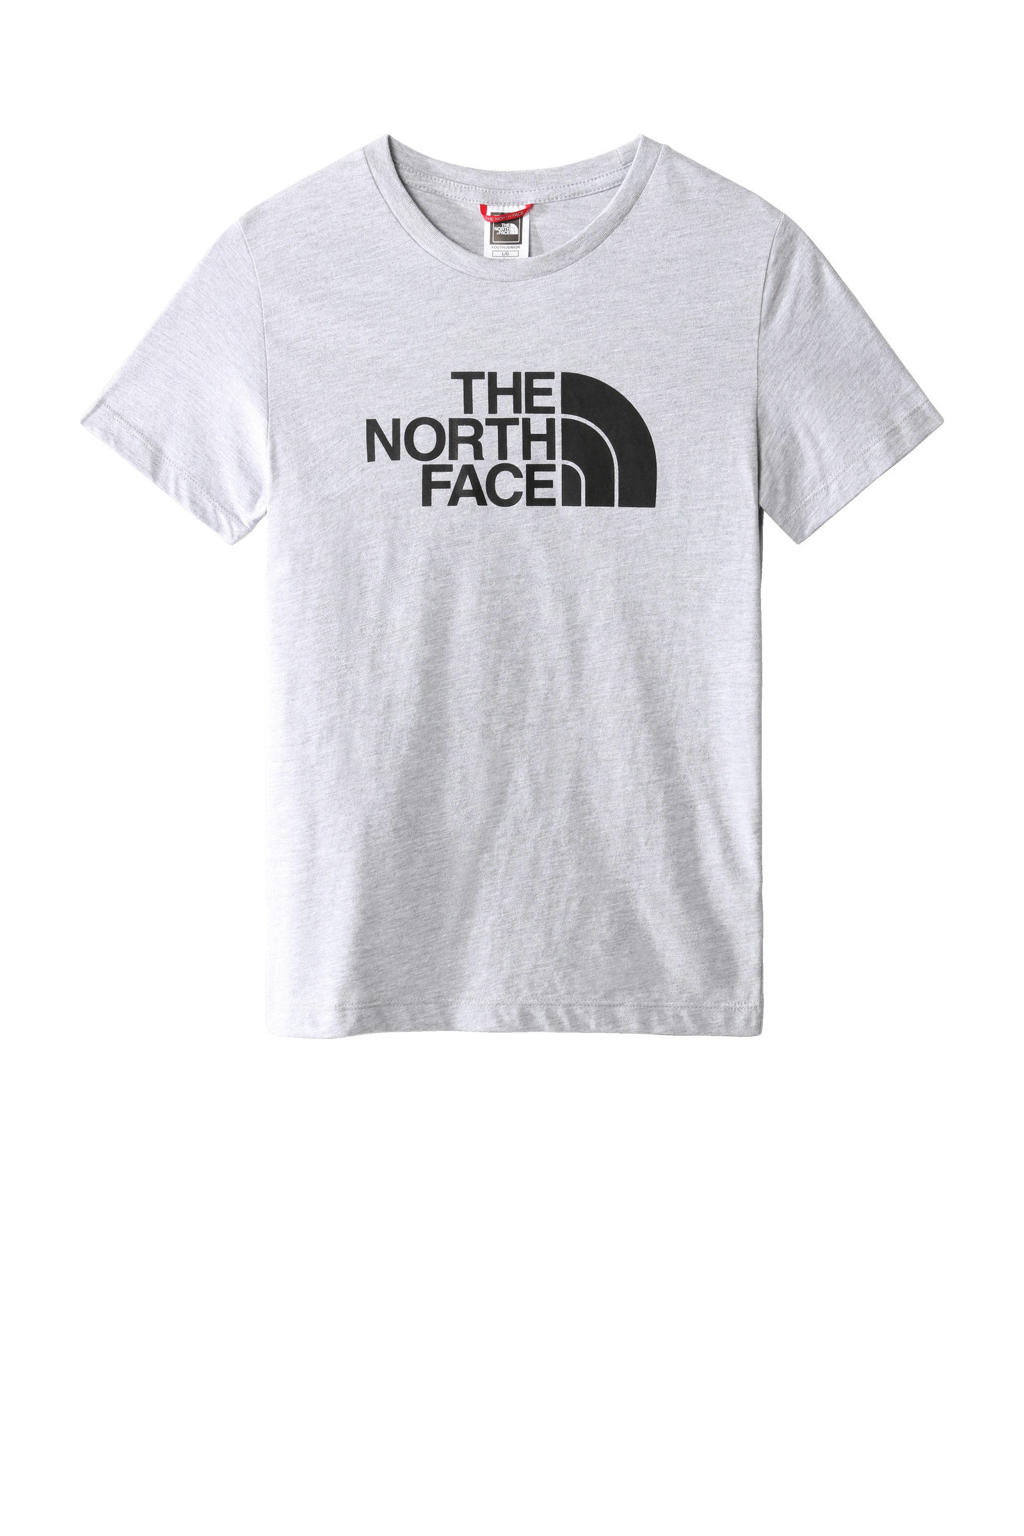 The North Face T-shirt grijs melange